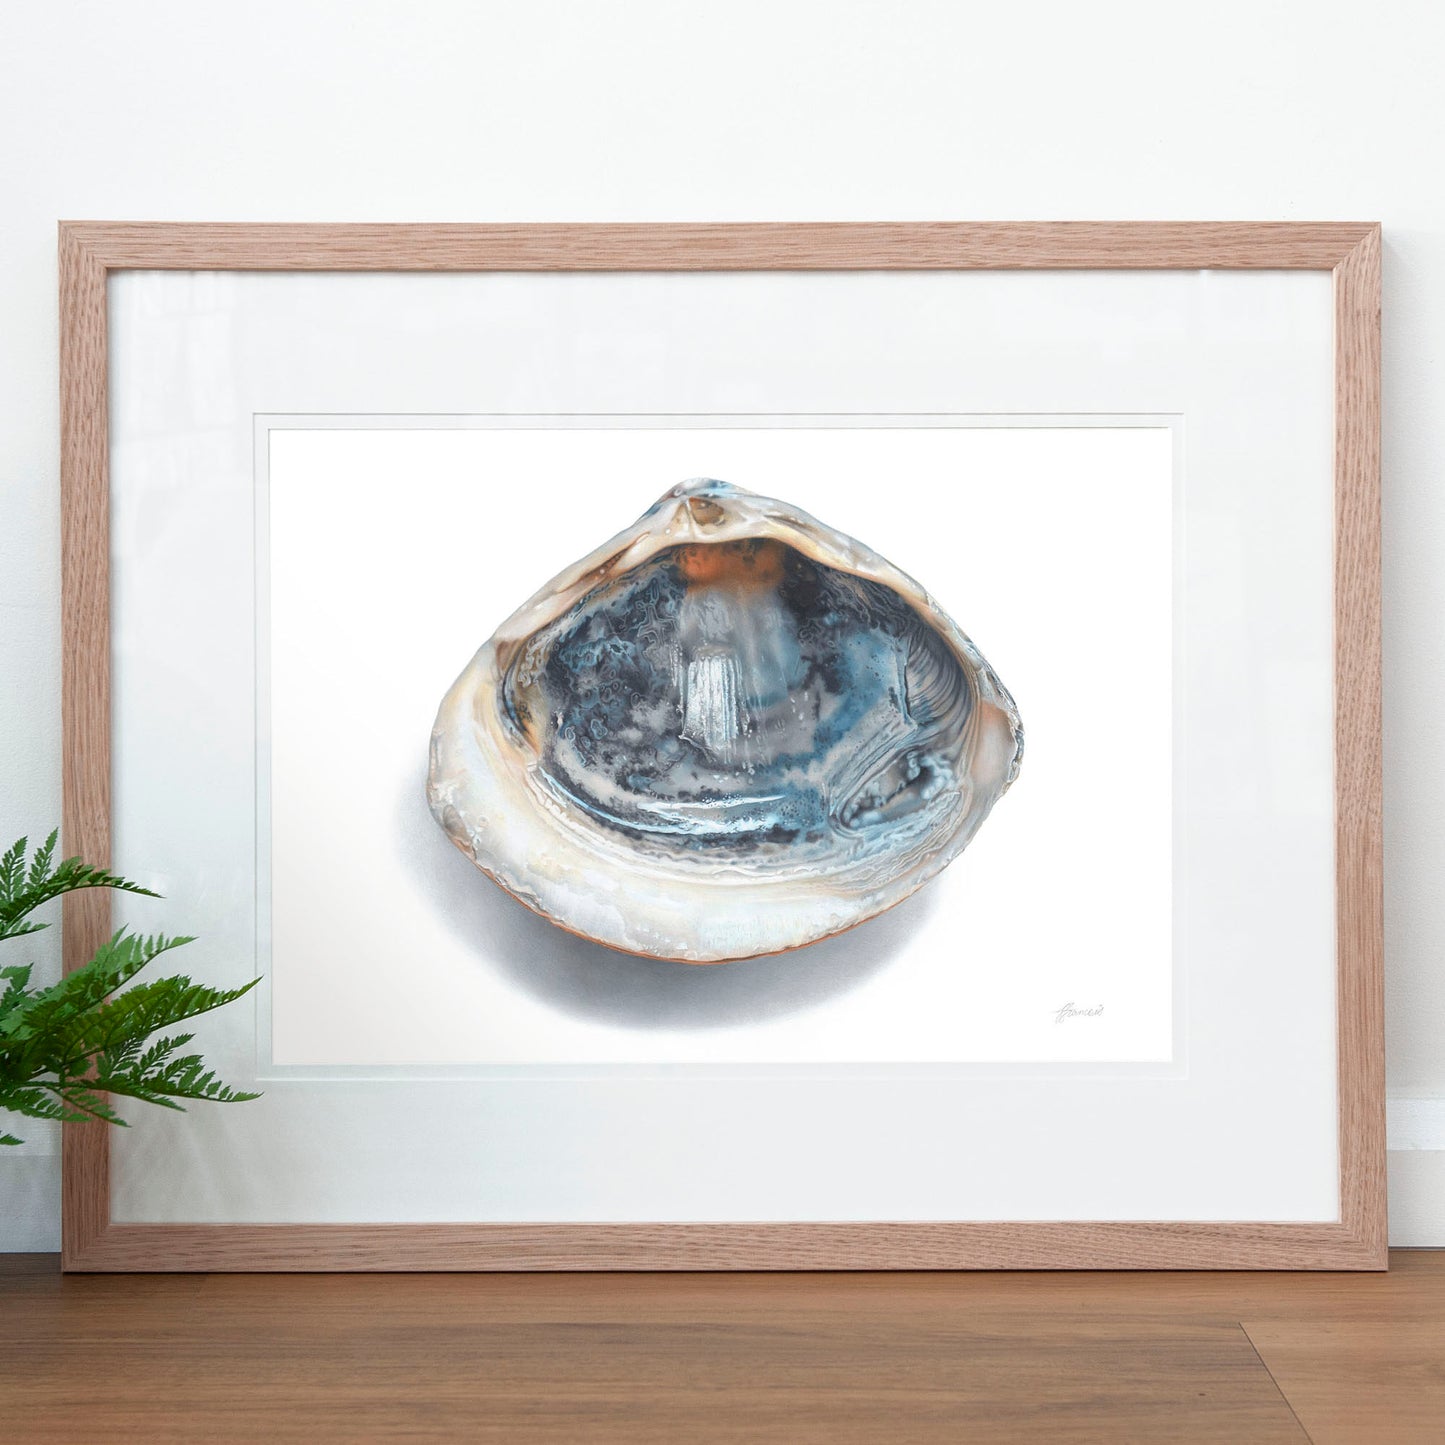 'Blue Shell' art print